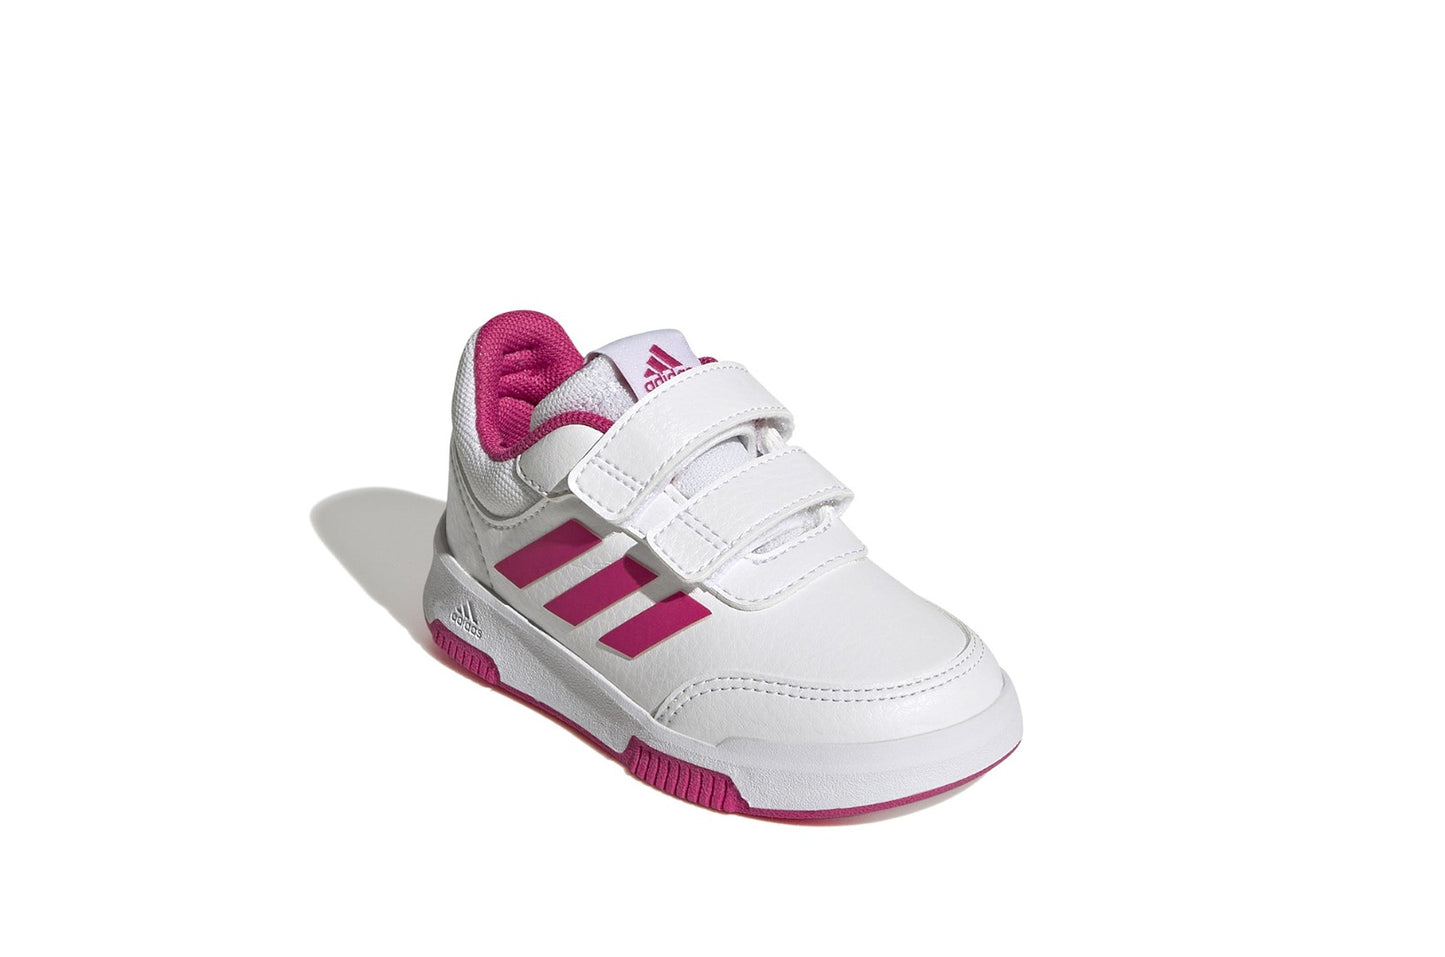 .Adidas Toddler Tensaur Sport 2.0 C - FTWHT/TEREMA/CBLACK - (GW6468) - FTP - R1L9